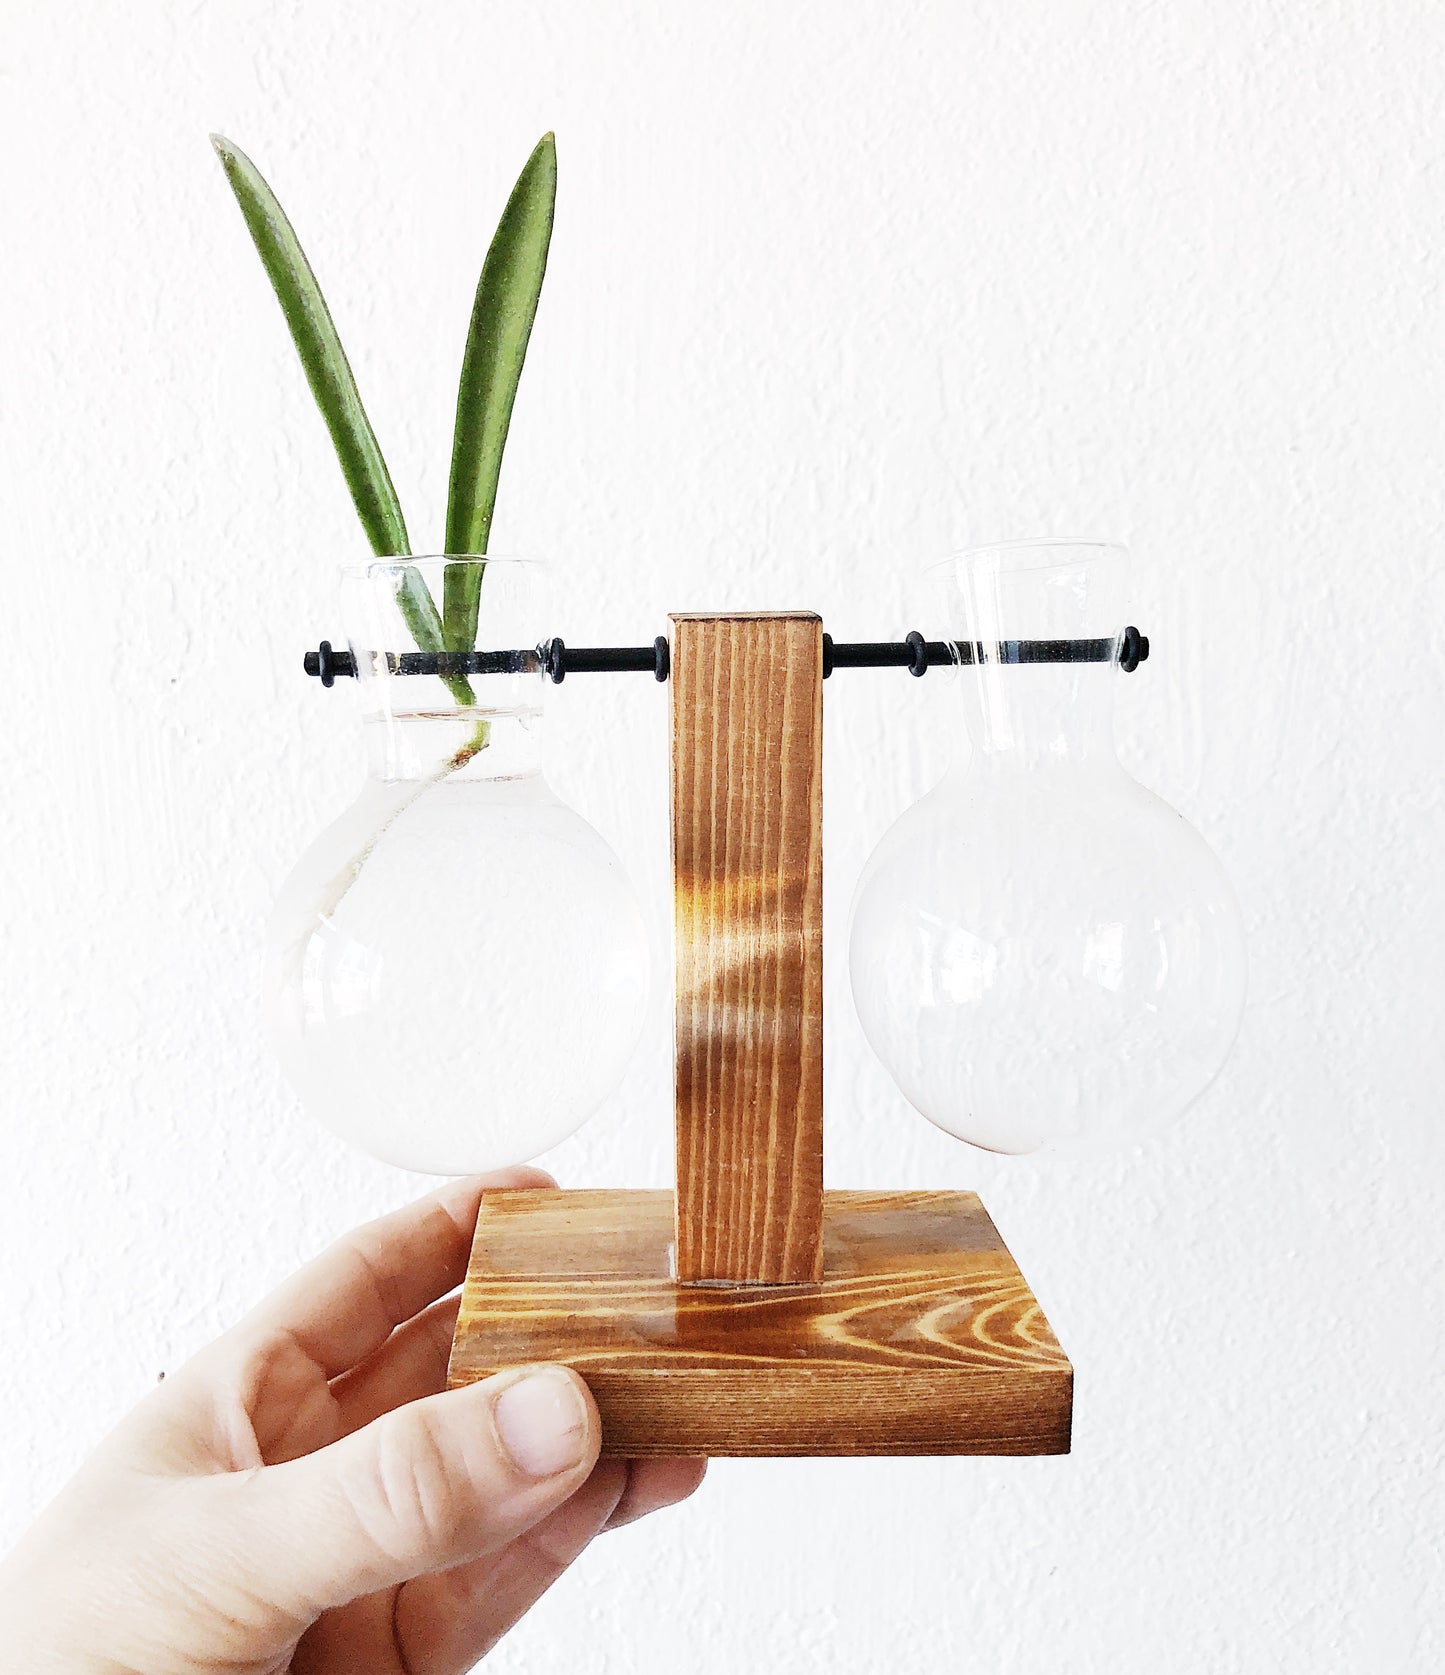 Lab Style Plant Propagator or Vase